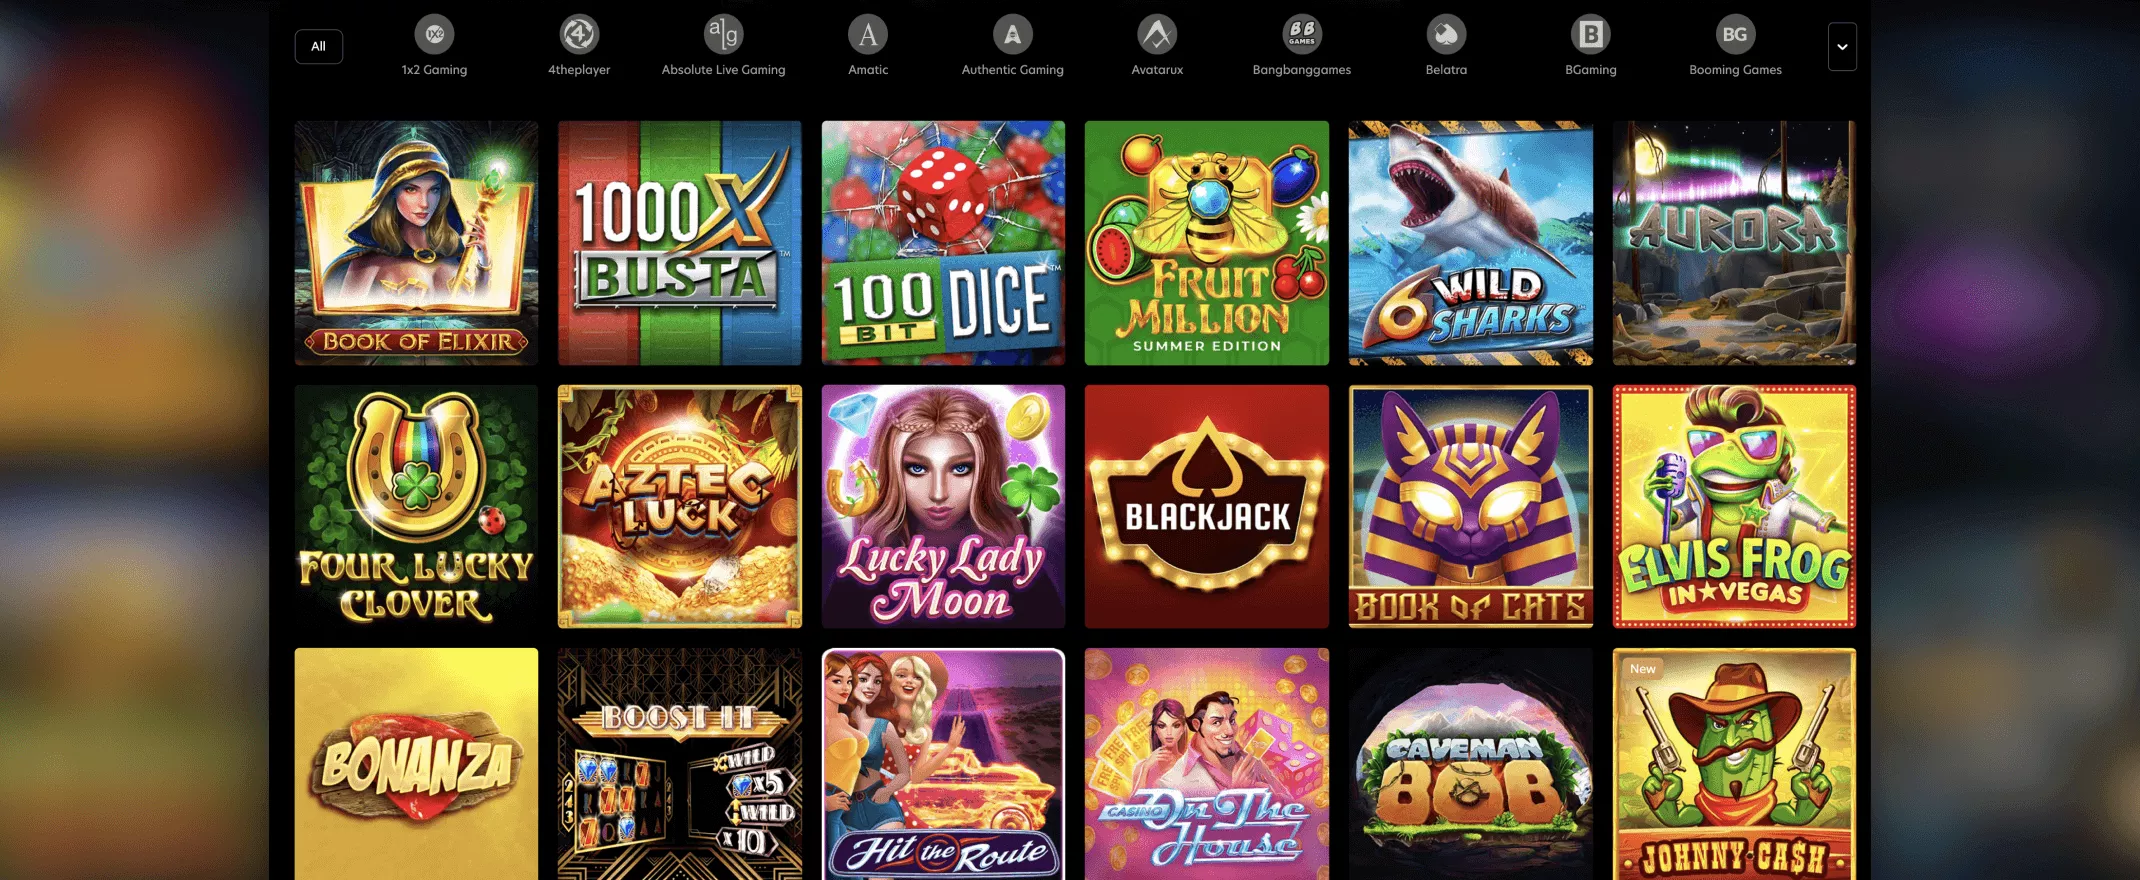 Kingdom casino games screenshot